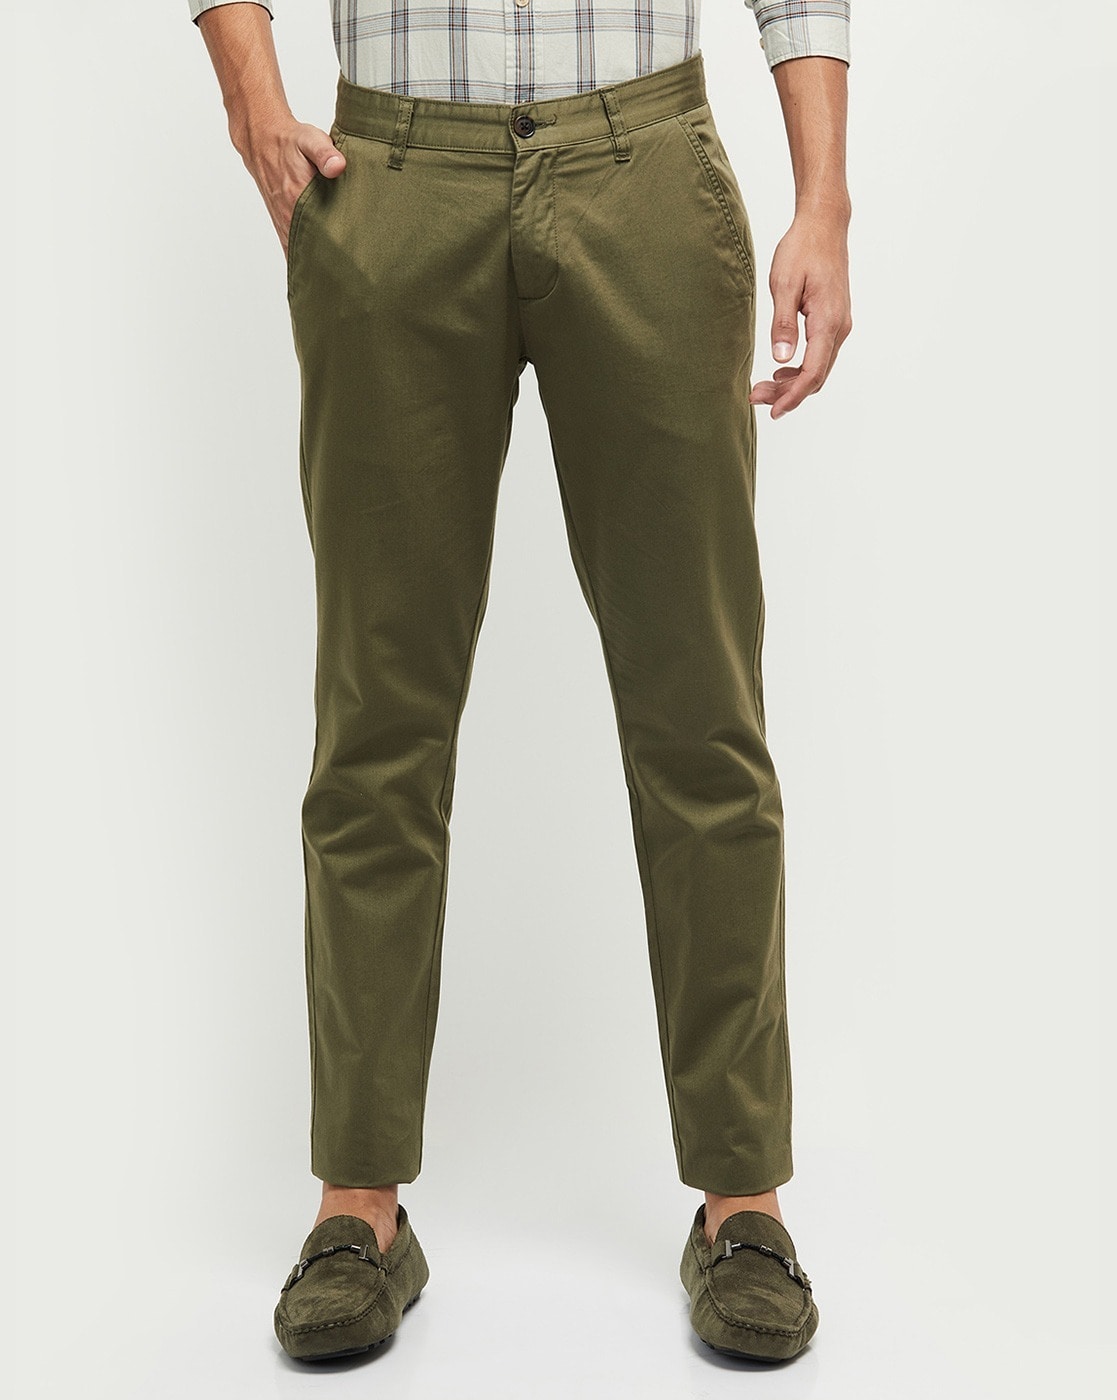 Buy Khaki Trousers  Pants for Men by MAX Online  Ajiocom